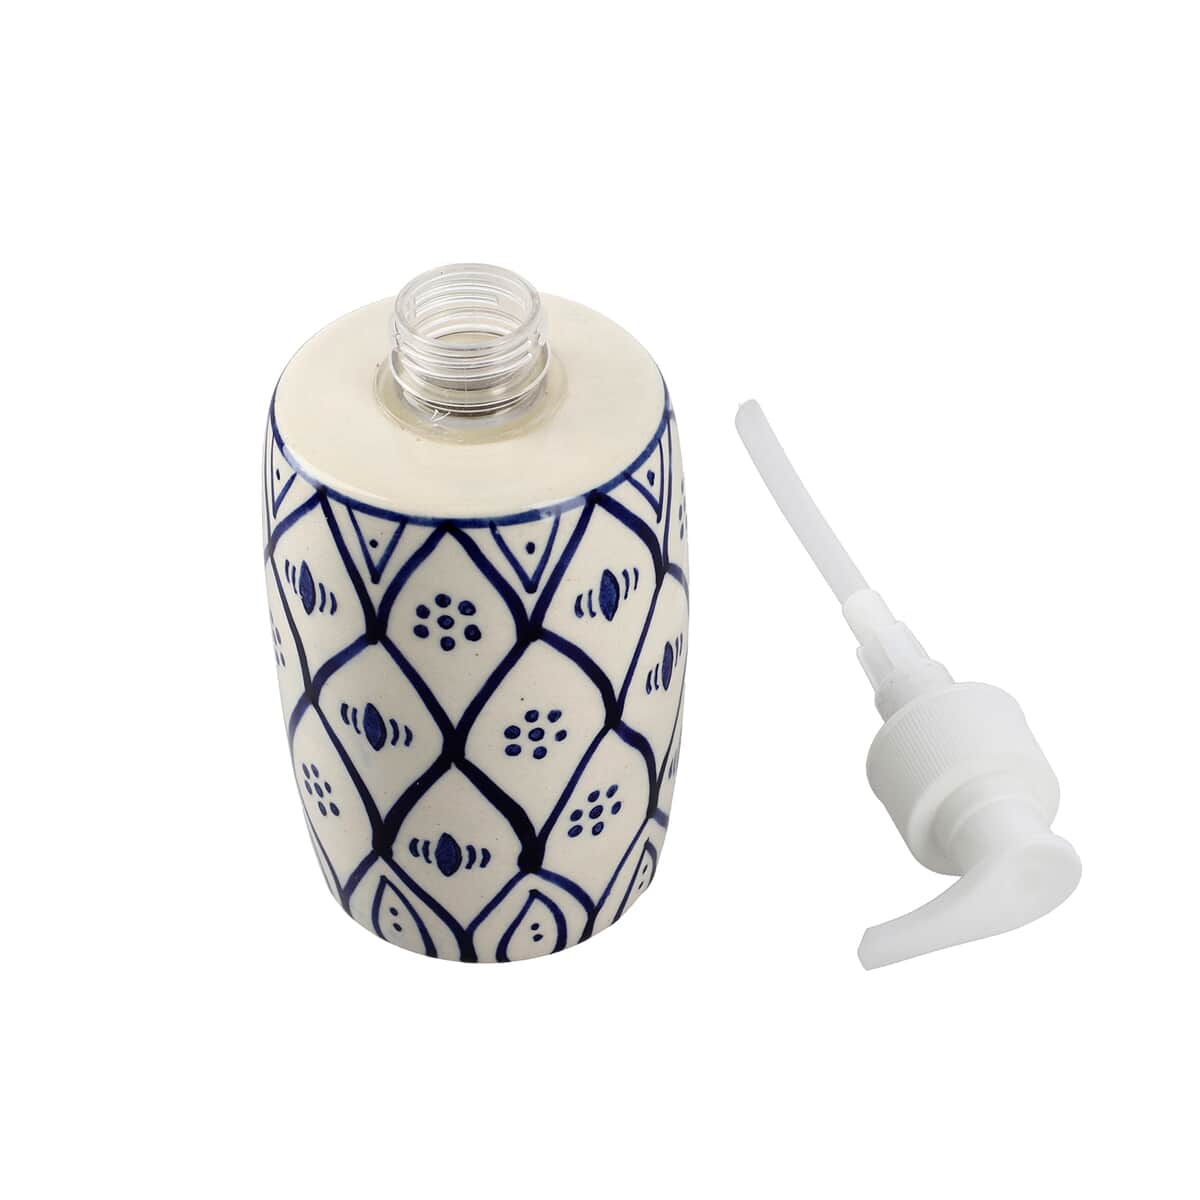 Set of 3 Ceramic Bathroom Accessory Liquid Soap Dispenser, Soap Tray & Tumbler - Blue and White image number 5